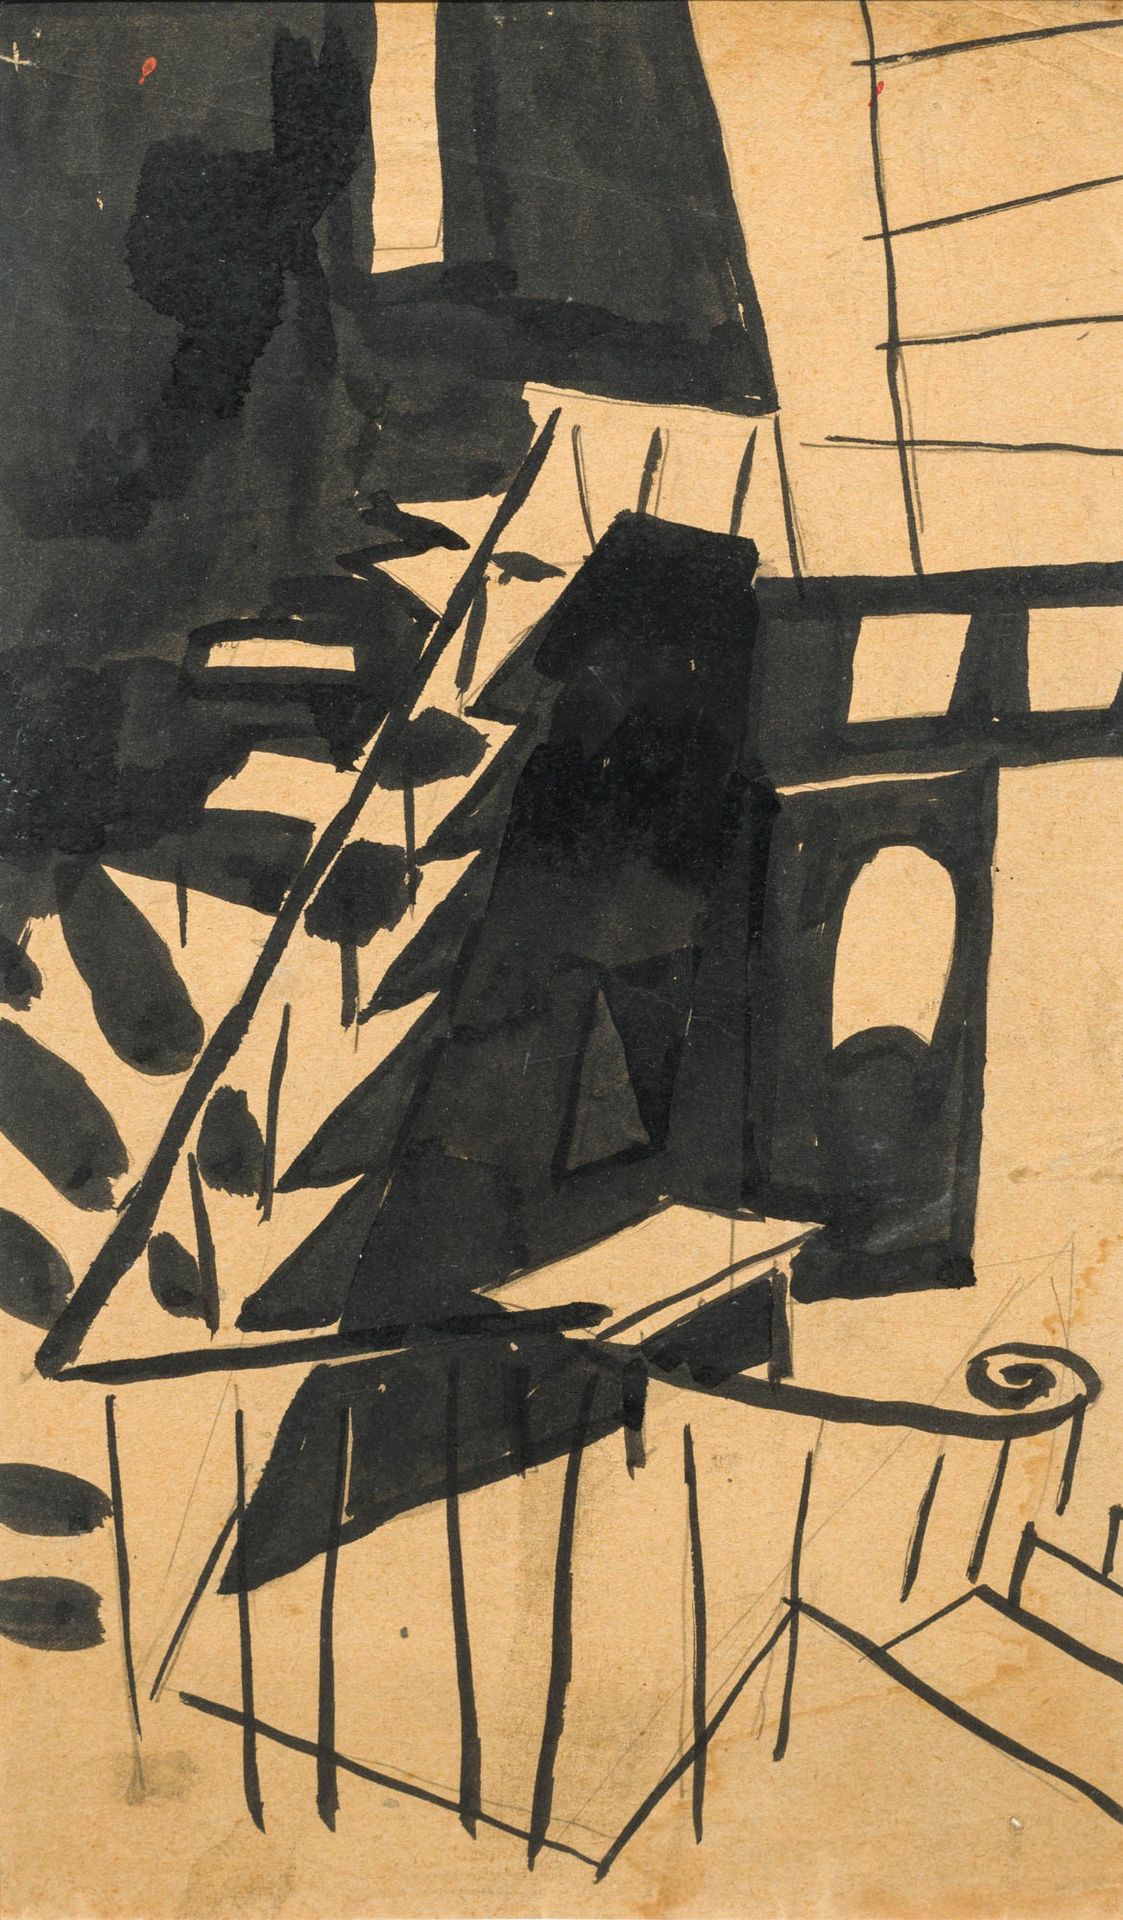 Iwan Puni 1892–1956 伊万-普尼 1892-1956

Escalier, 1915

纸上水墨和铅笔

35 x 19 cm